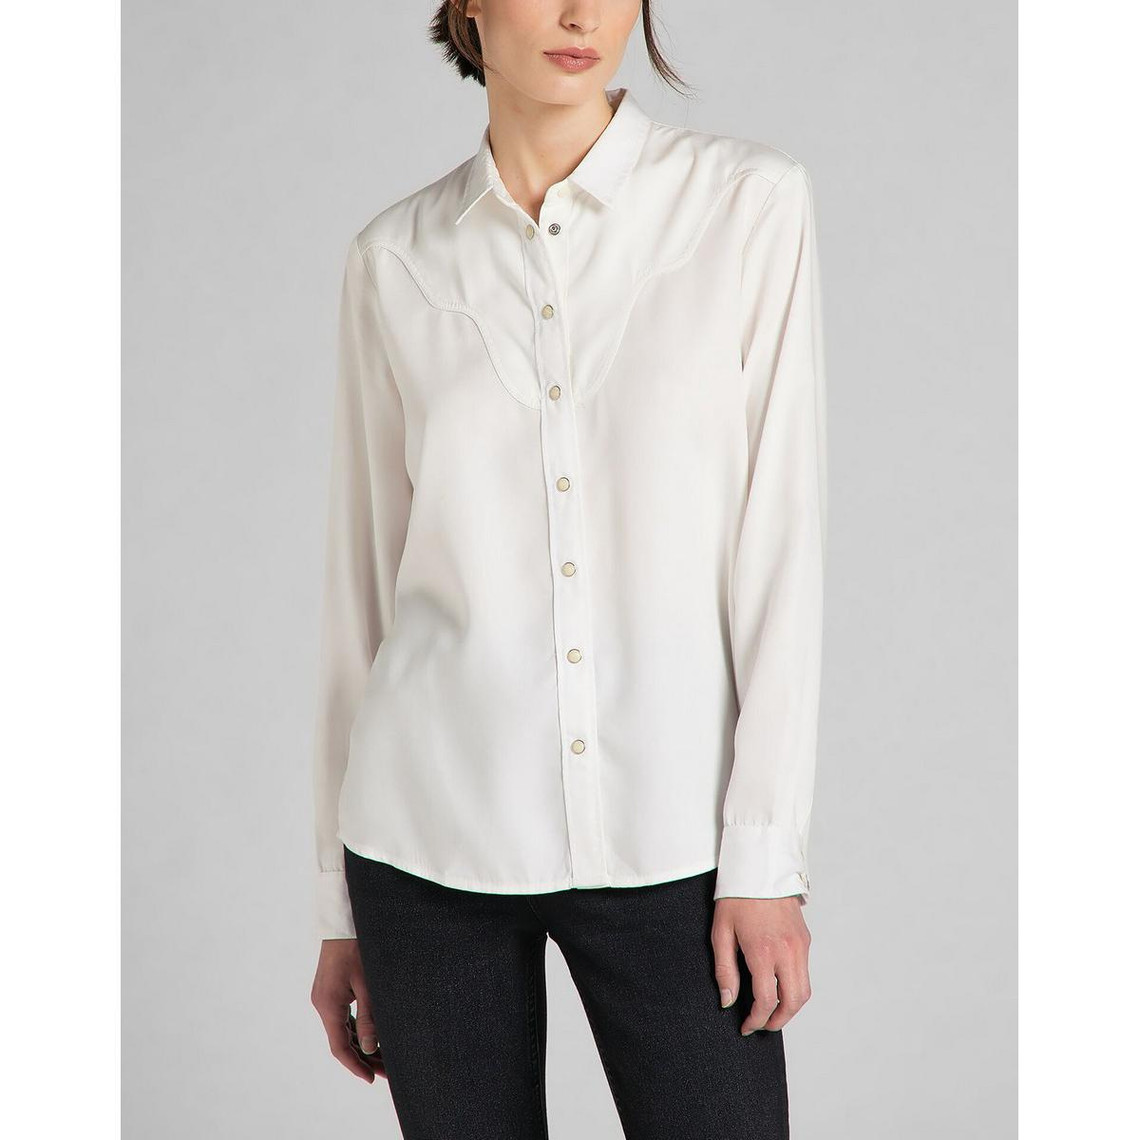 Chemise Femme Western Shirt blanc